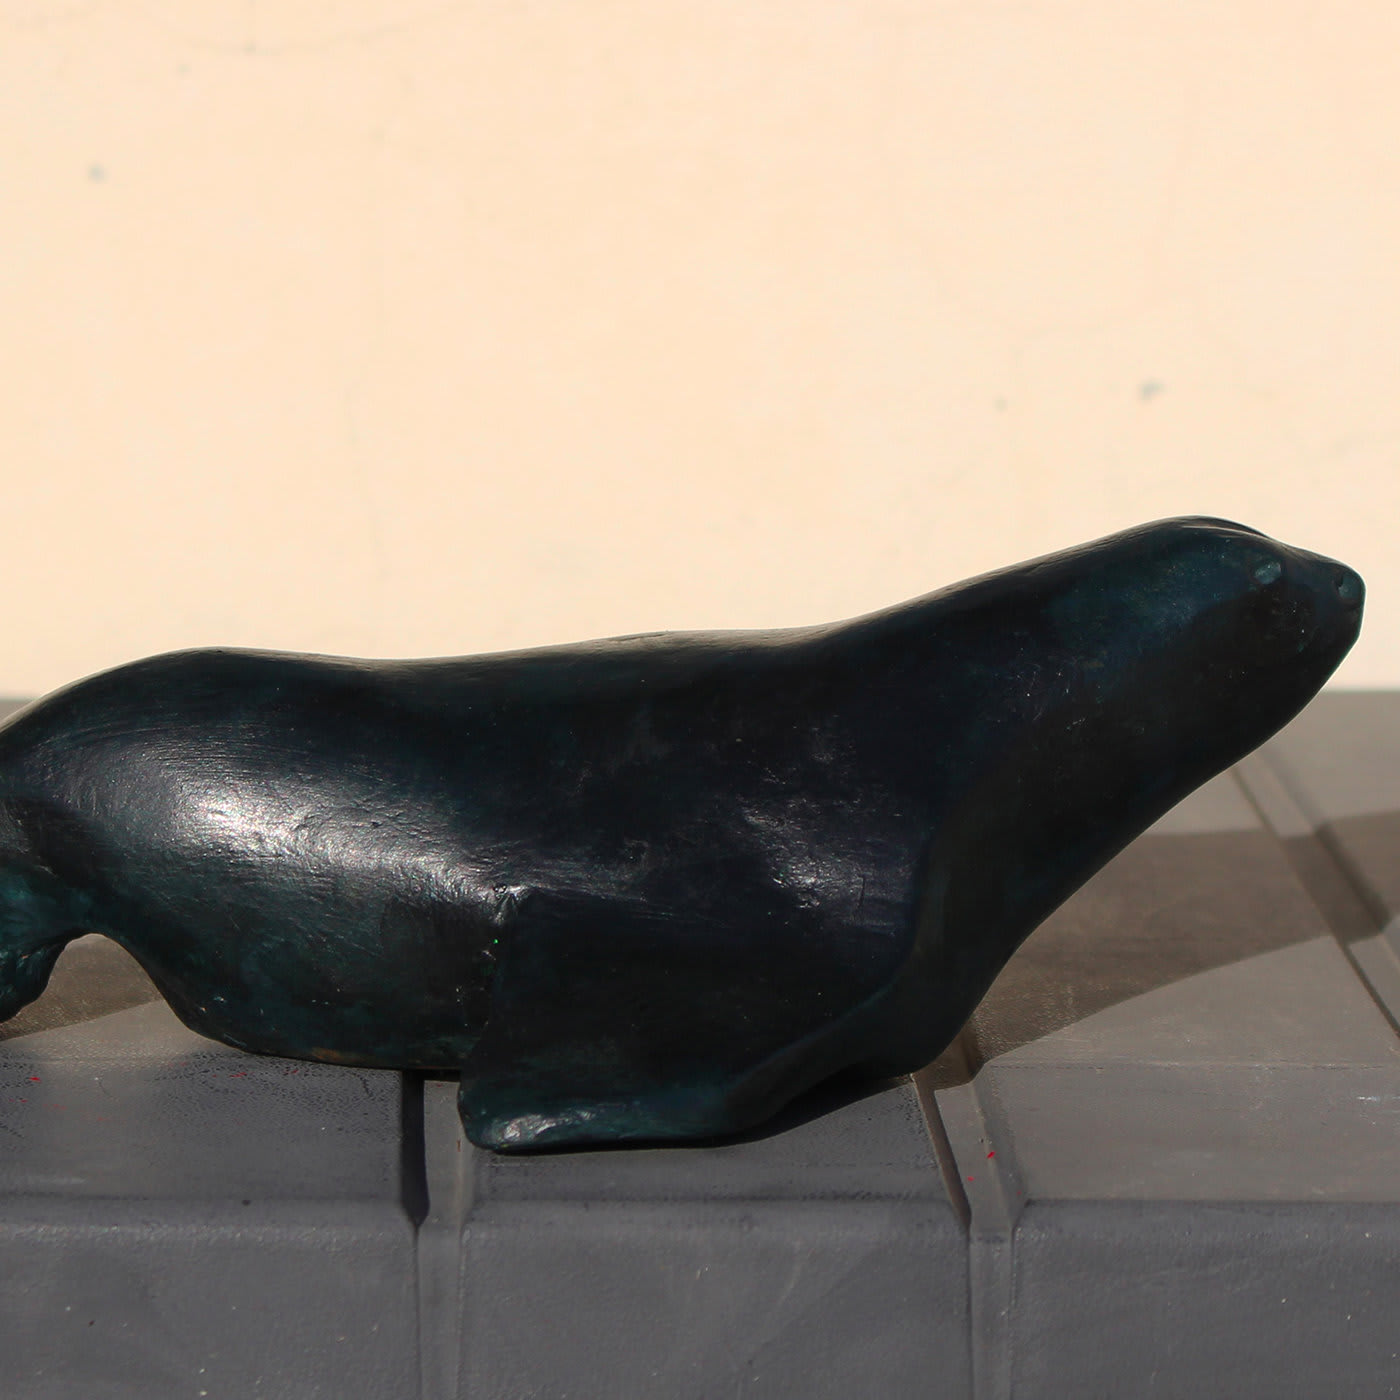 Teal Seal Sculpture - Daniele Nannini